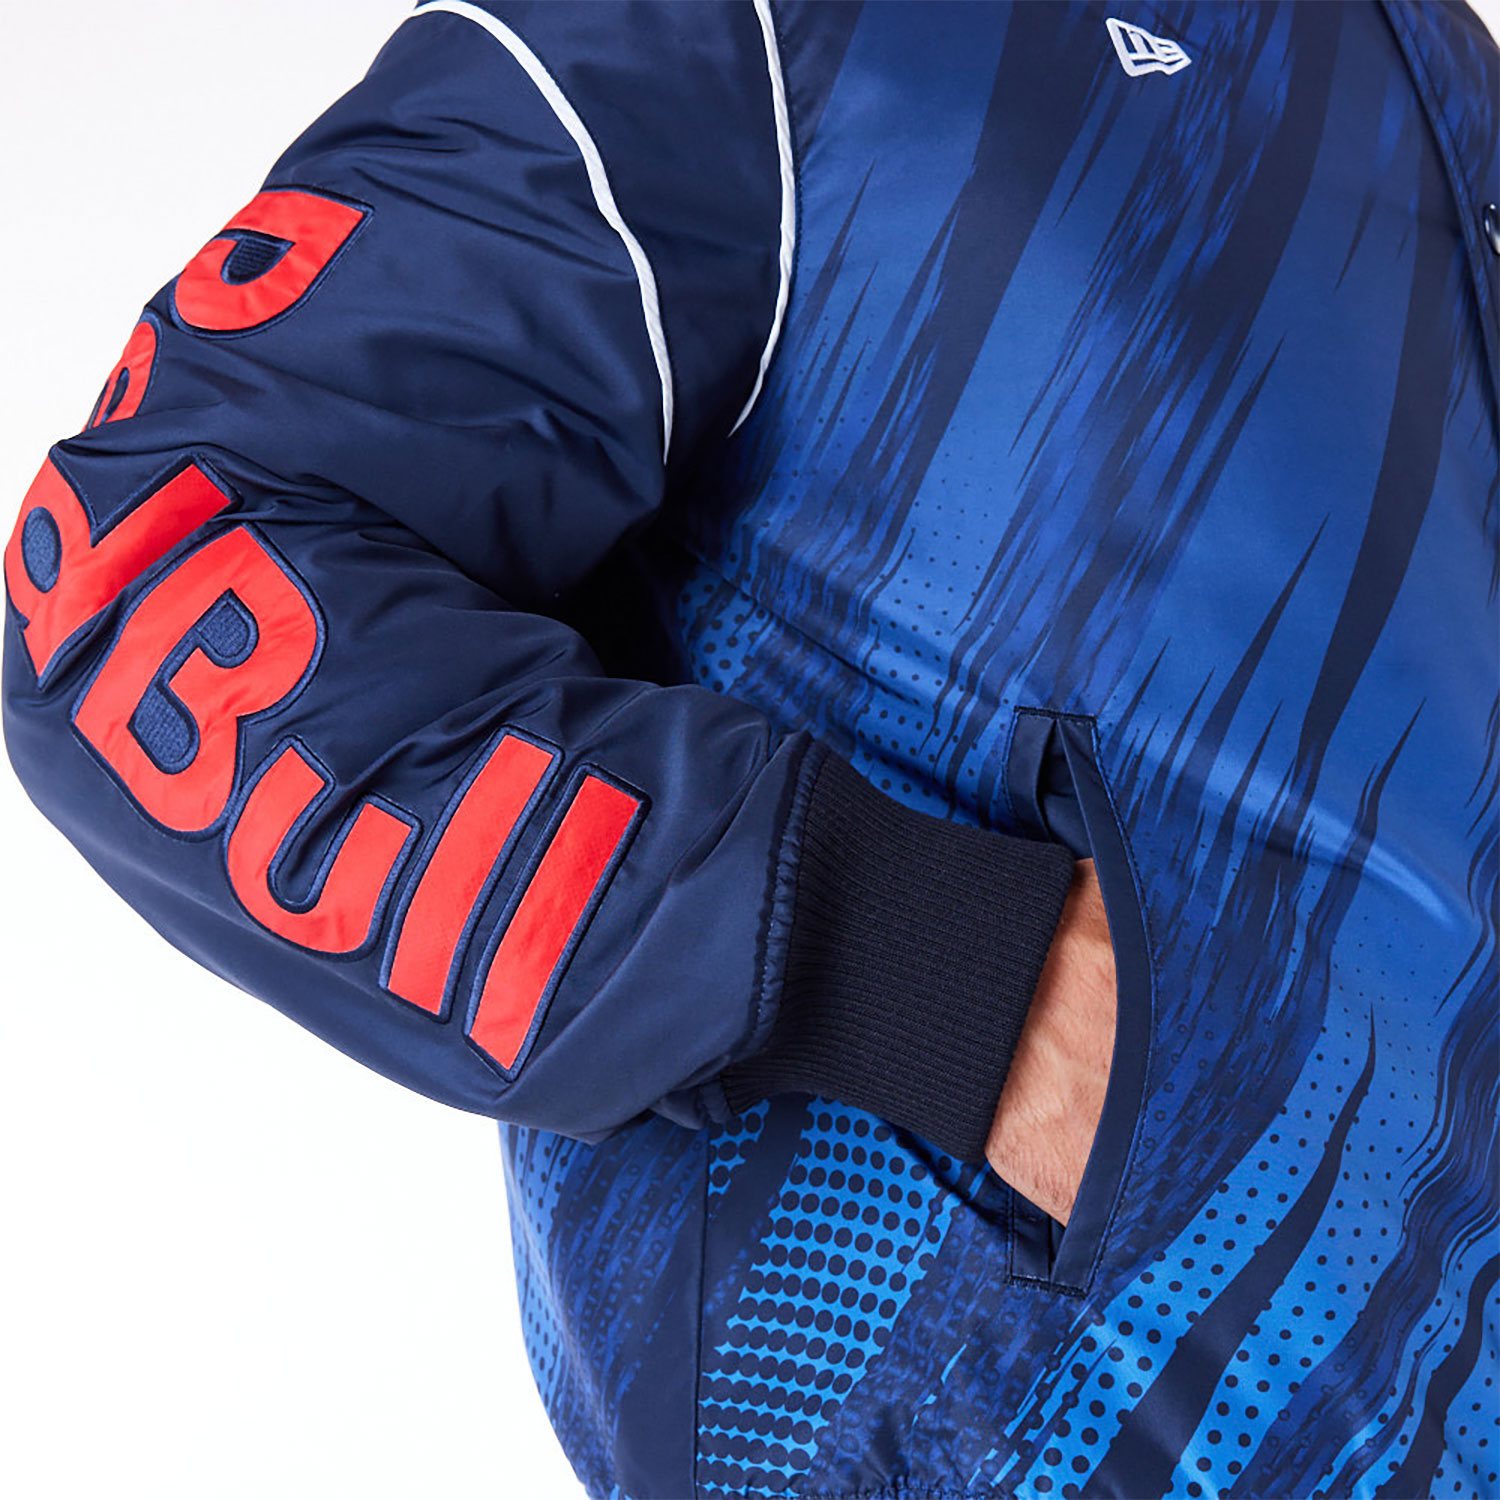 Red Bull Sim Racing Navy Bomber Jacket